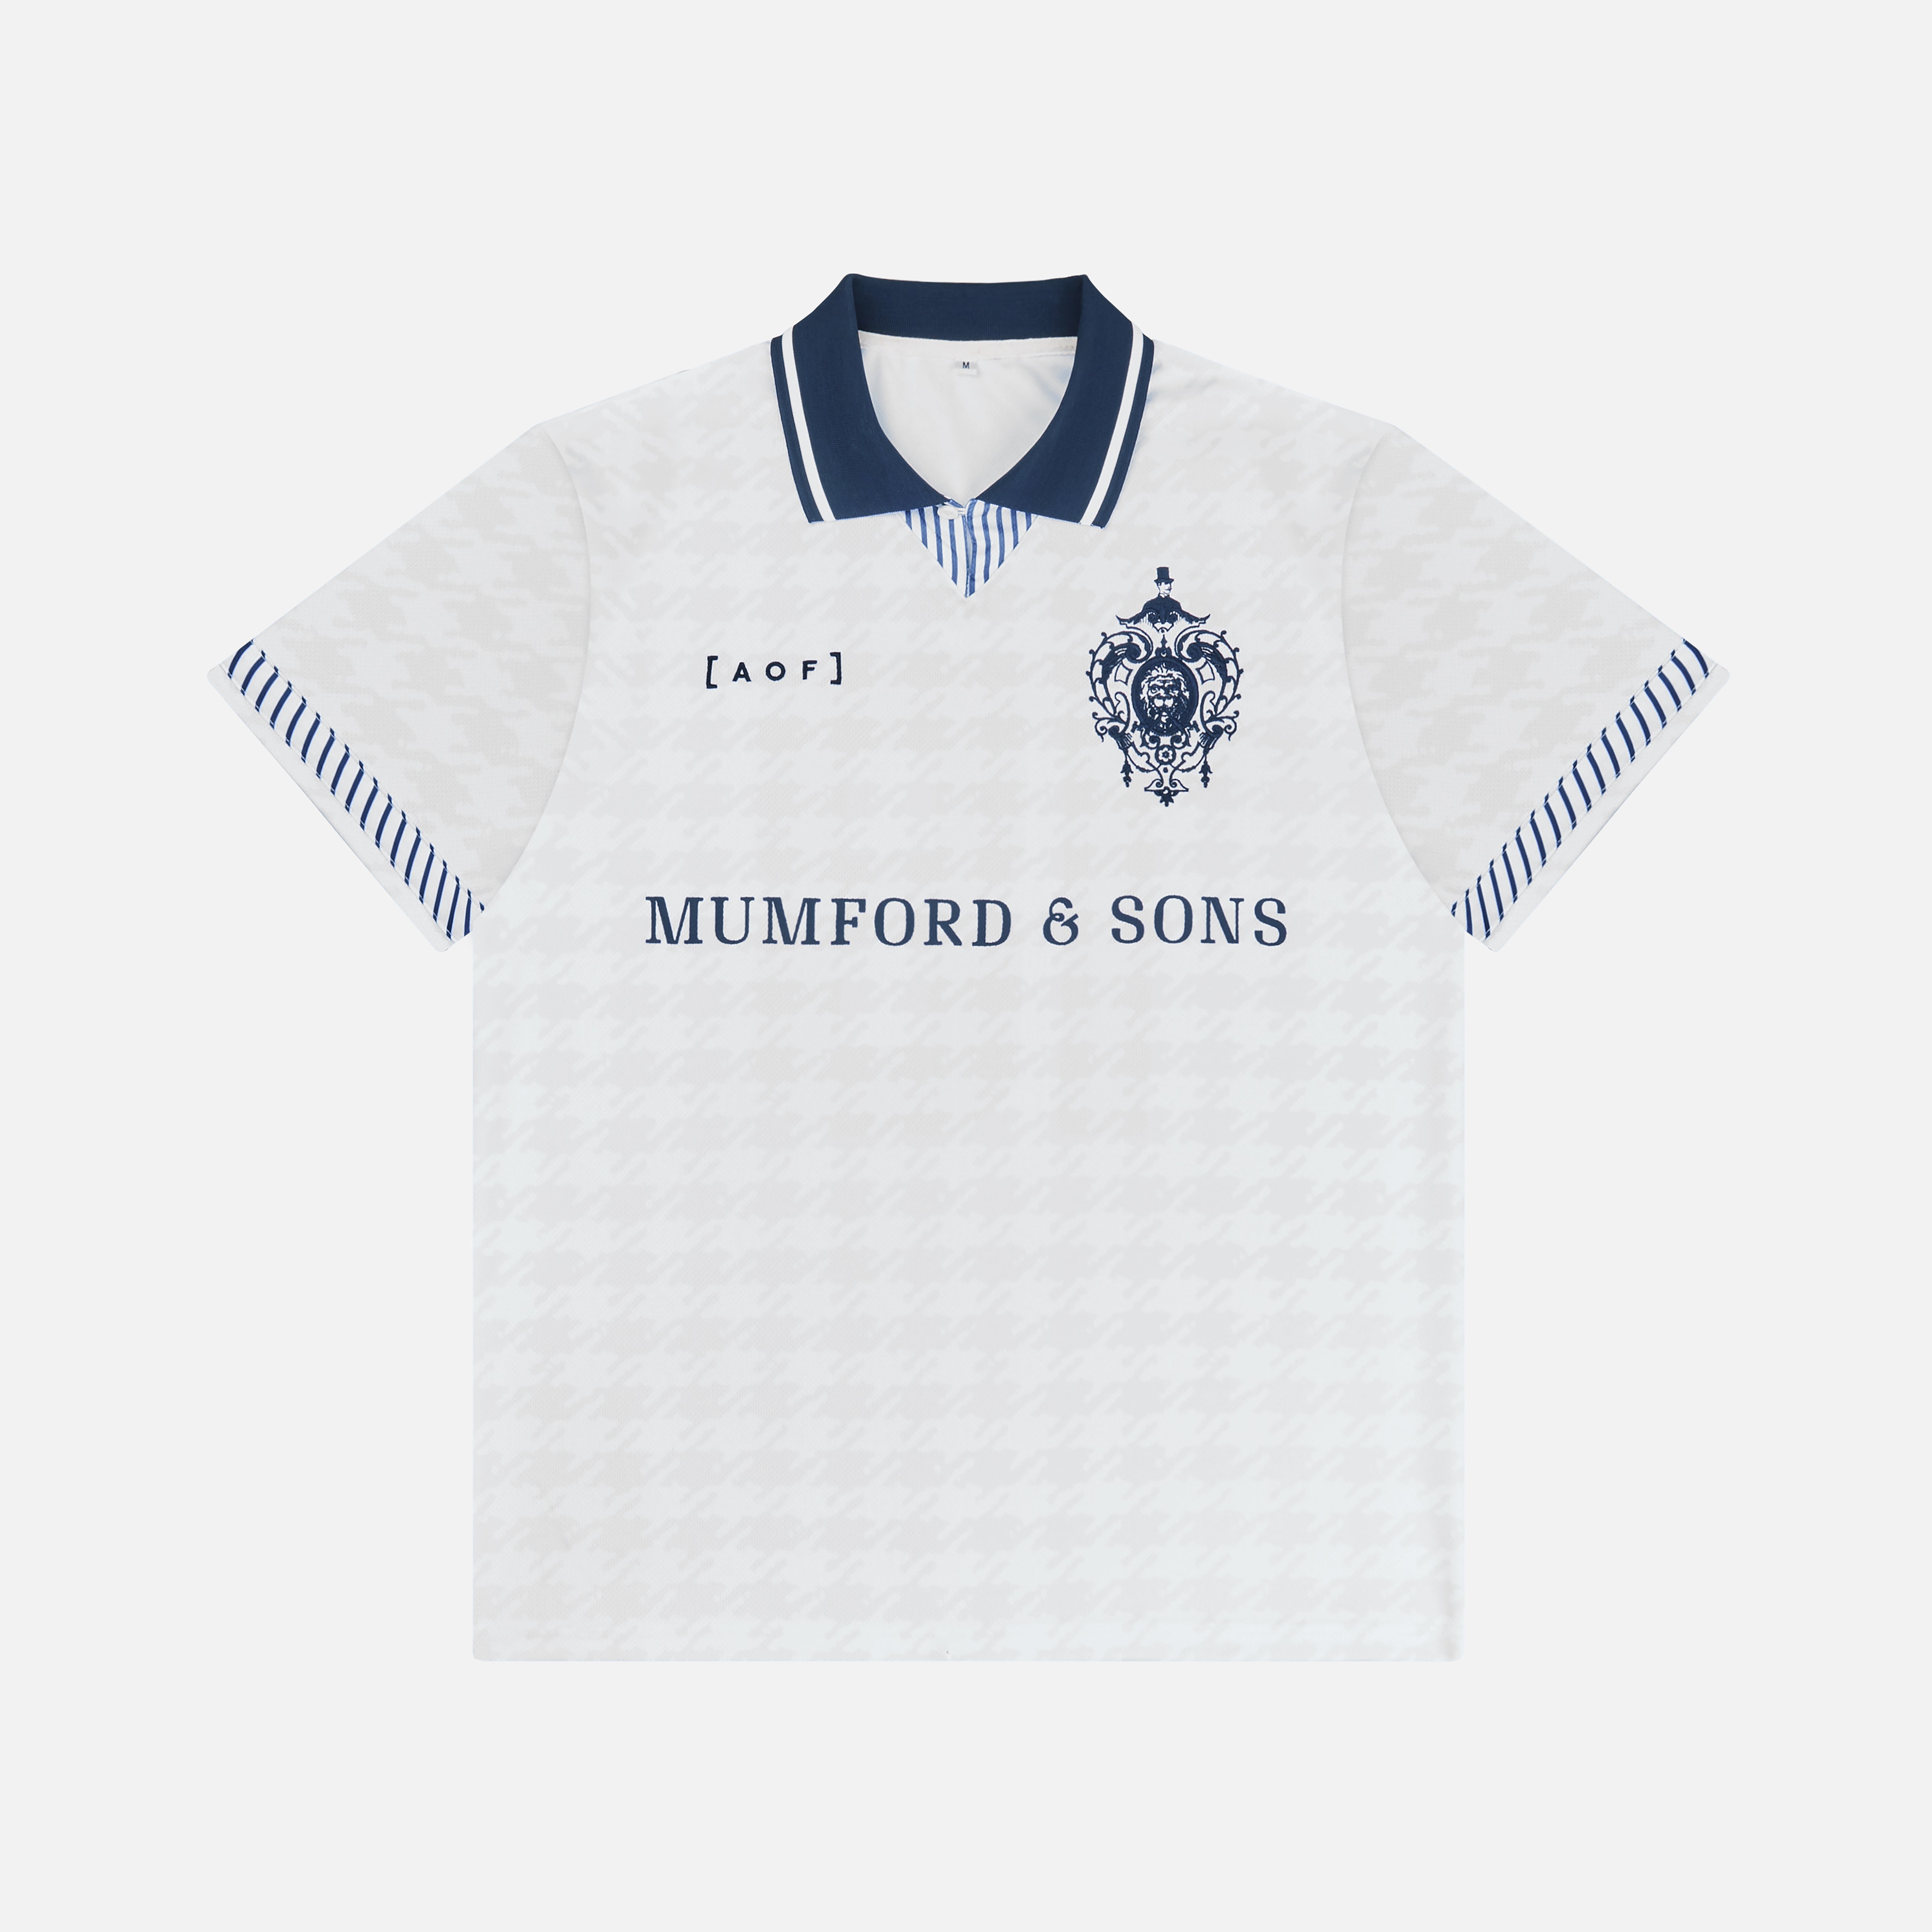 Mumford & Sons Shirt